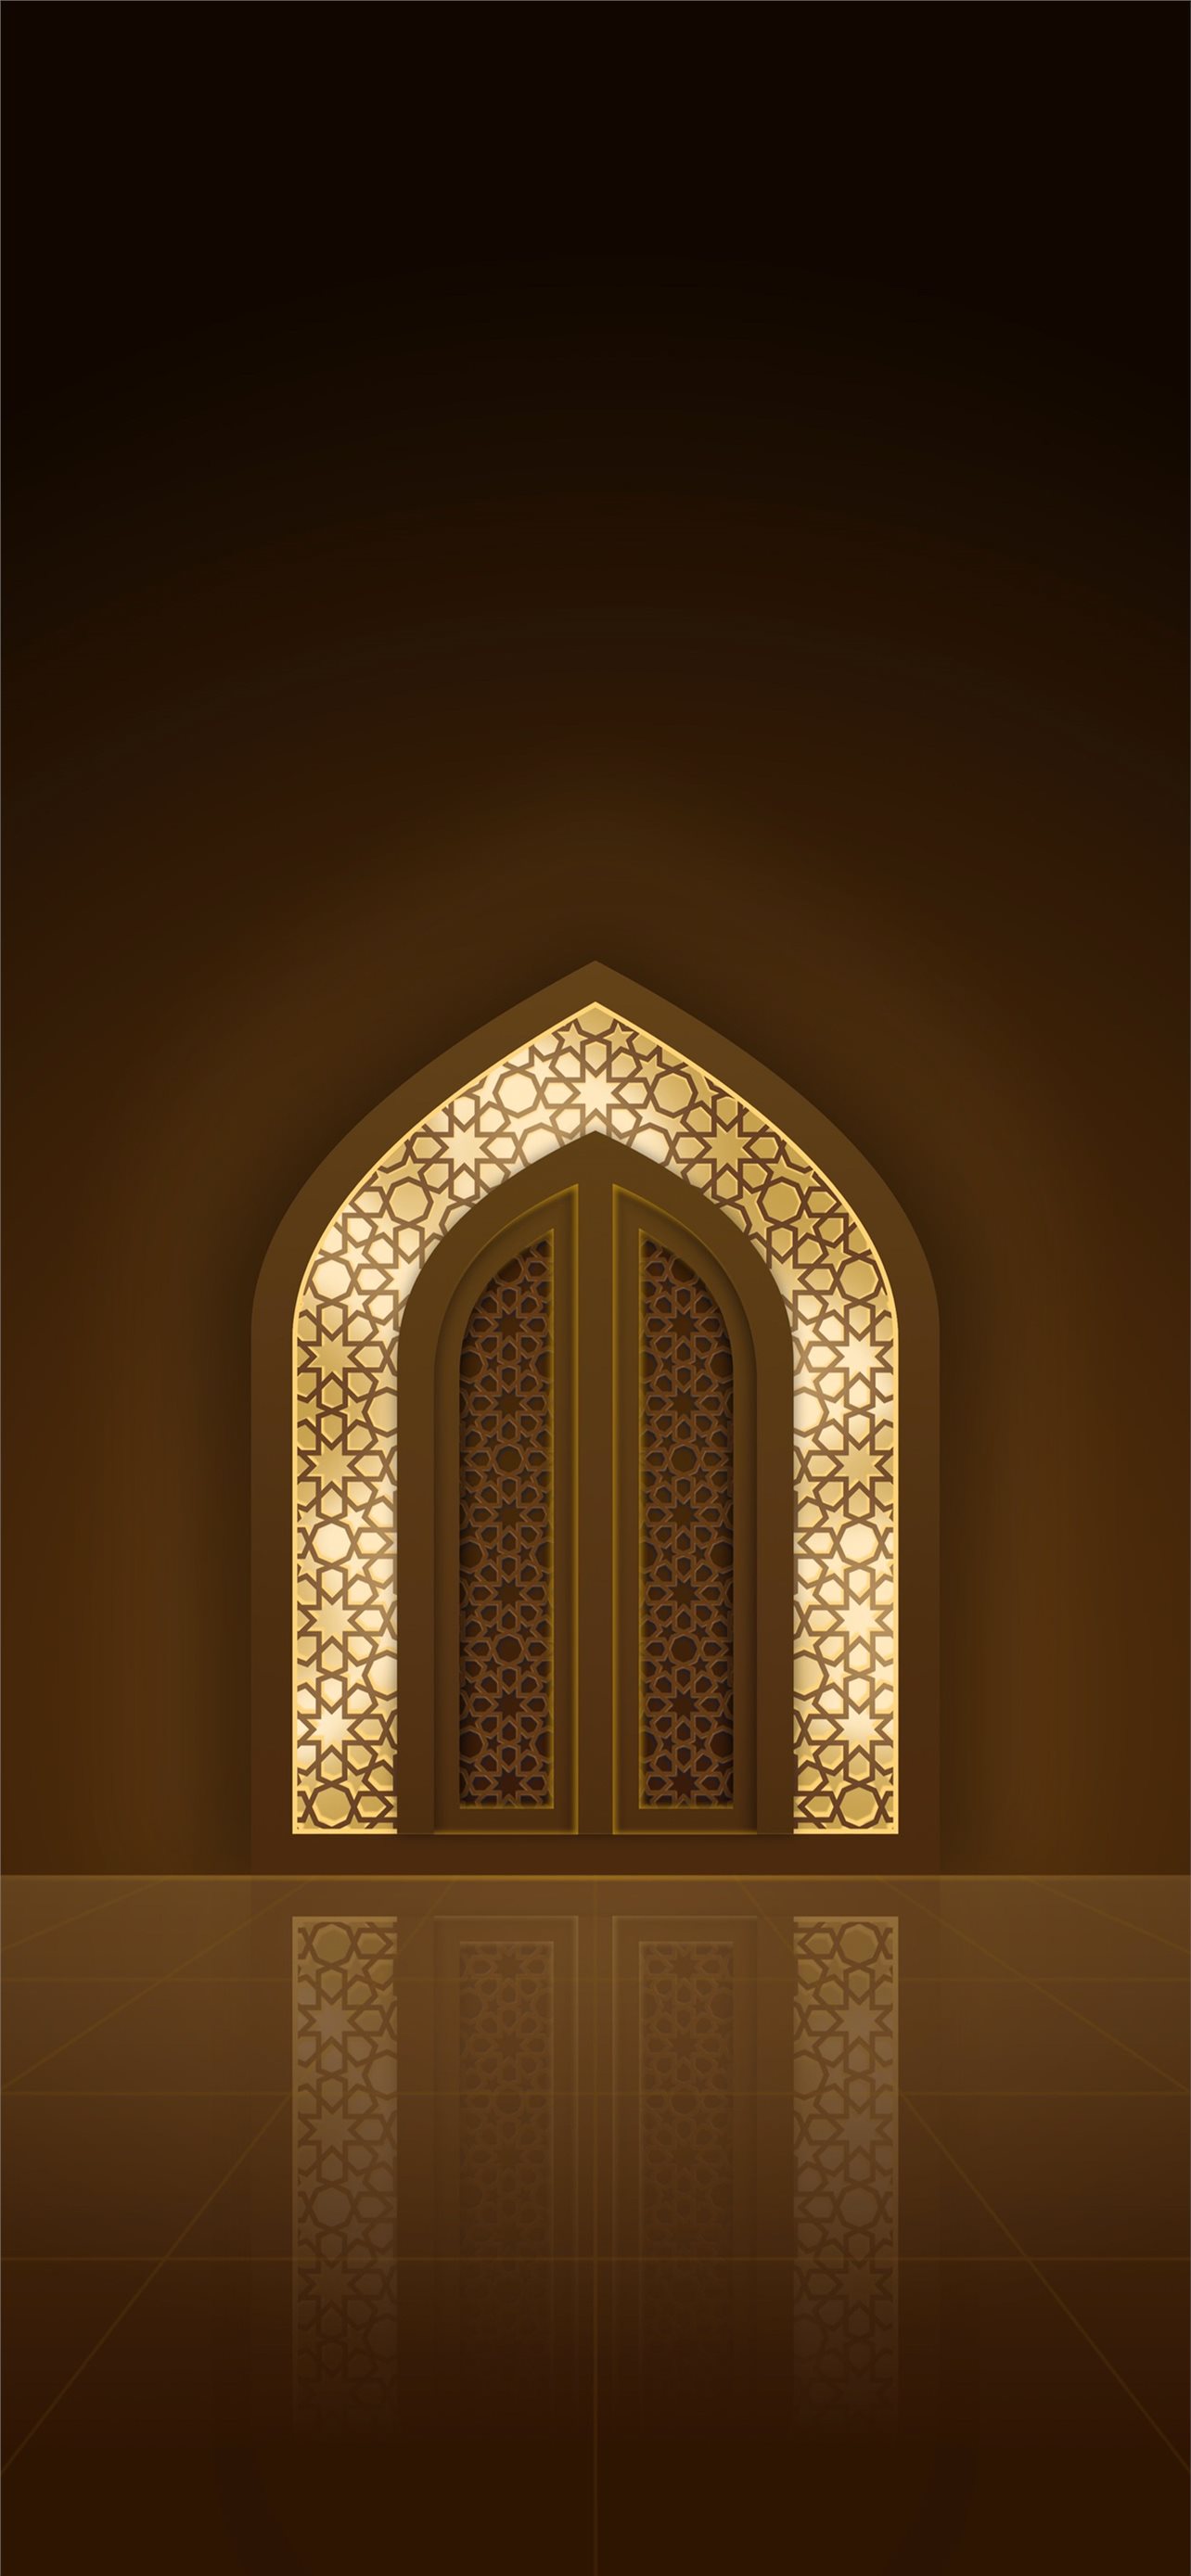 Ramadan Central iPhone Wallpaper Free Download